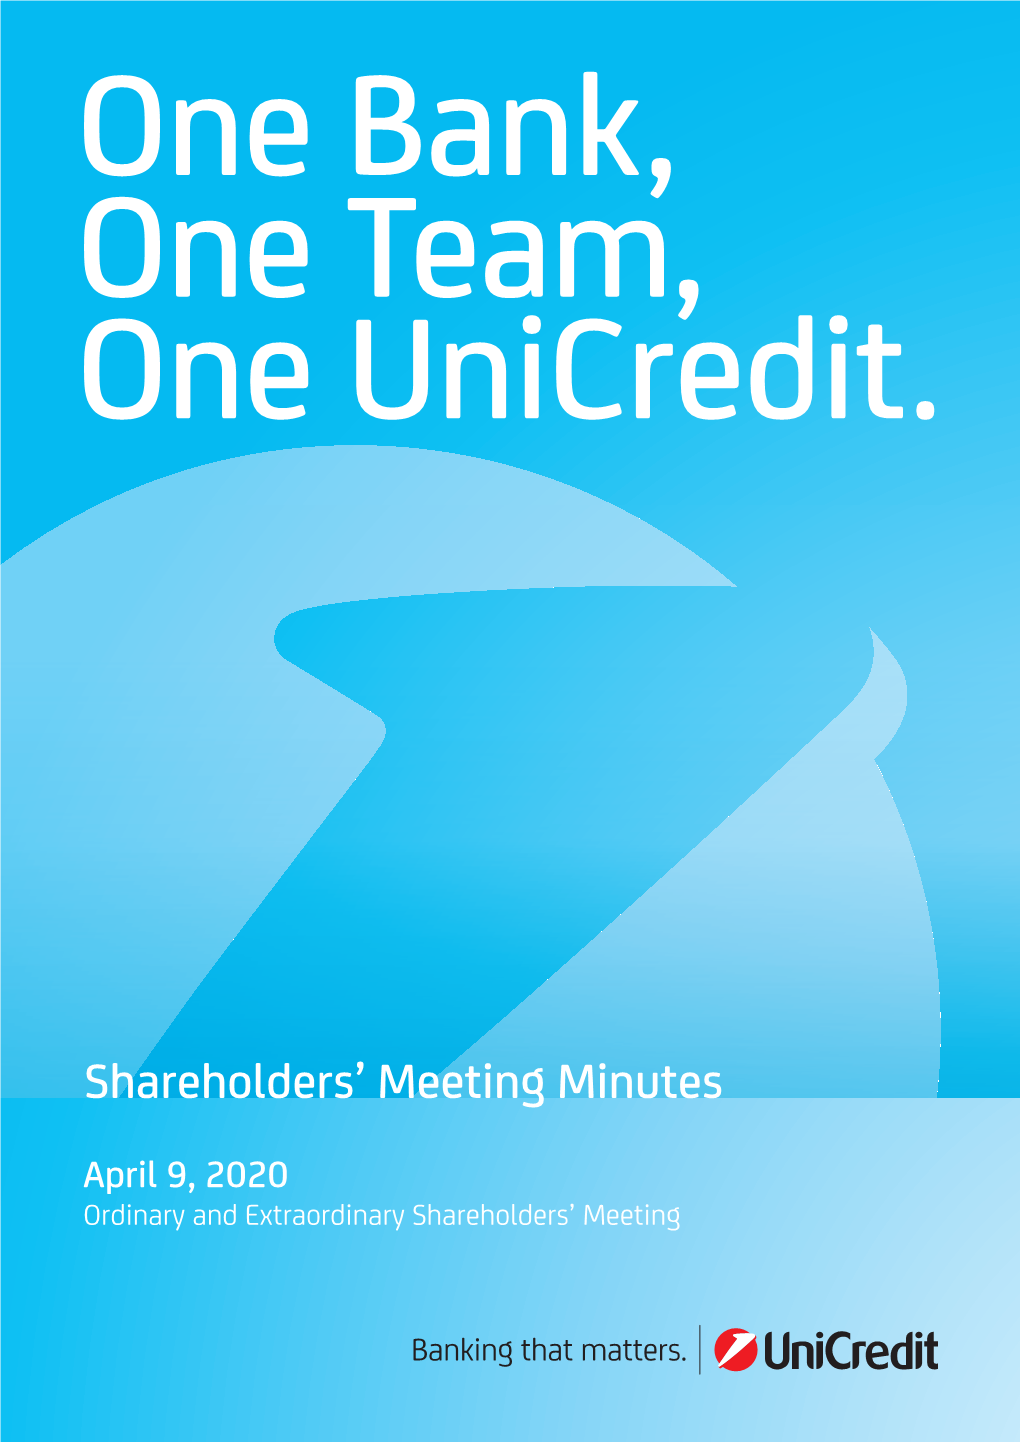 Shareholders' Meeting Minutes